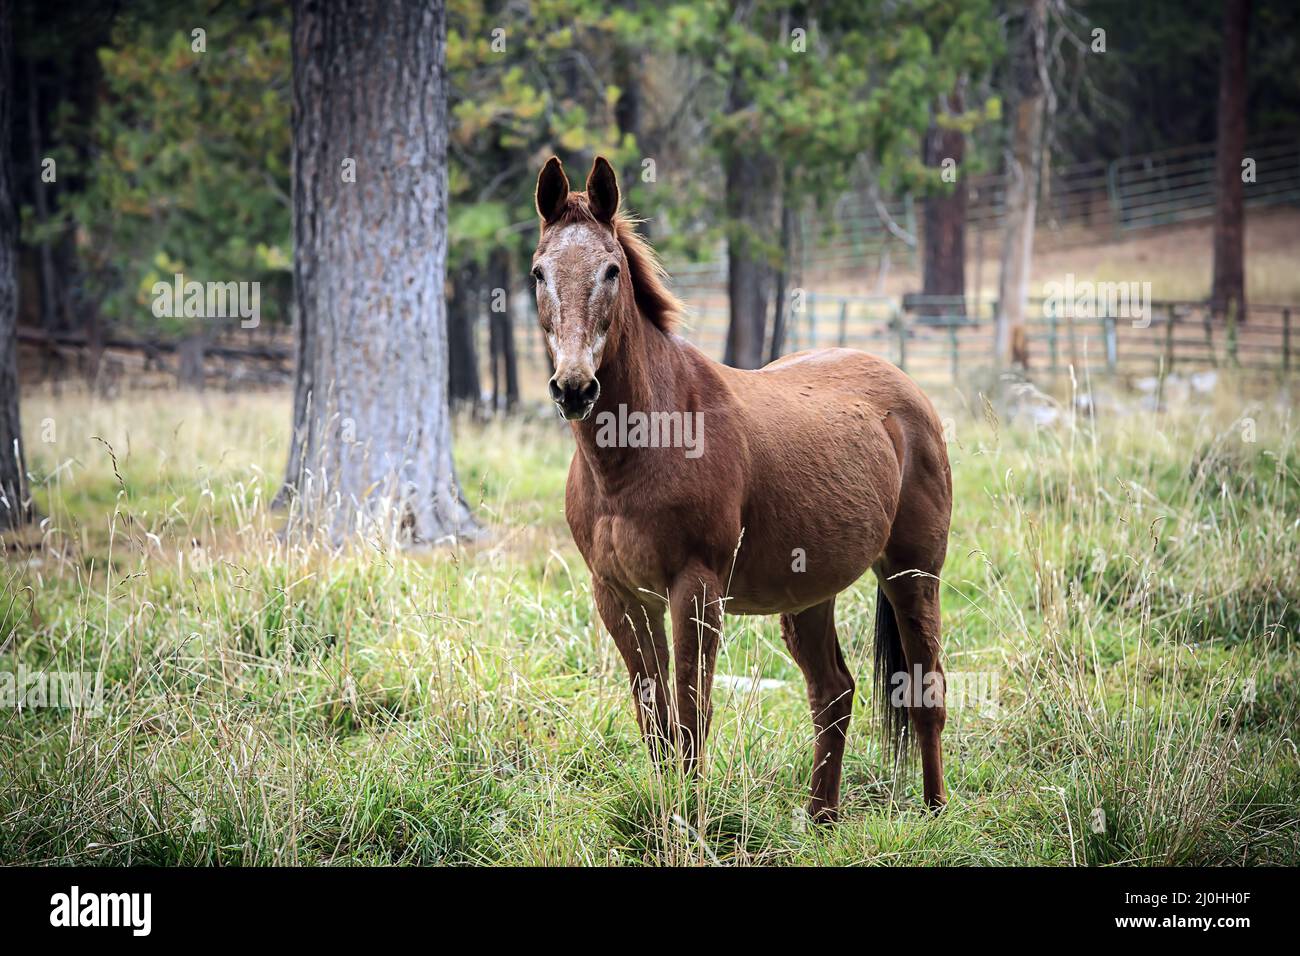 Chestnut colored horse in feild. Stock Photo